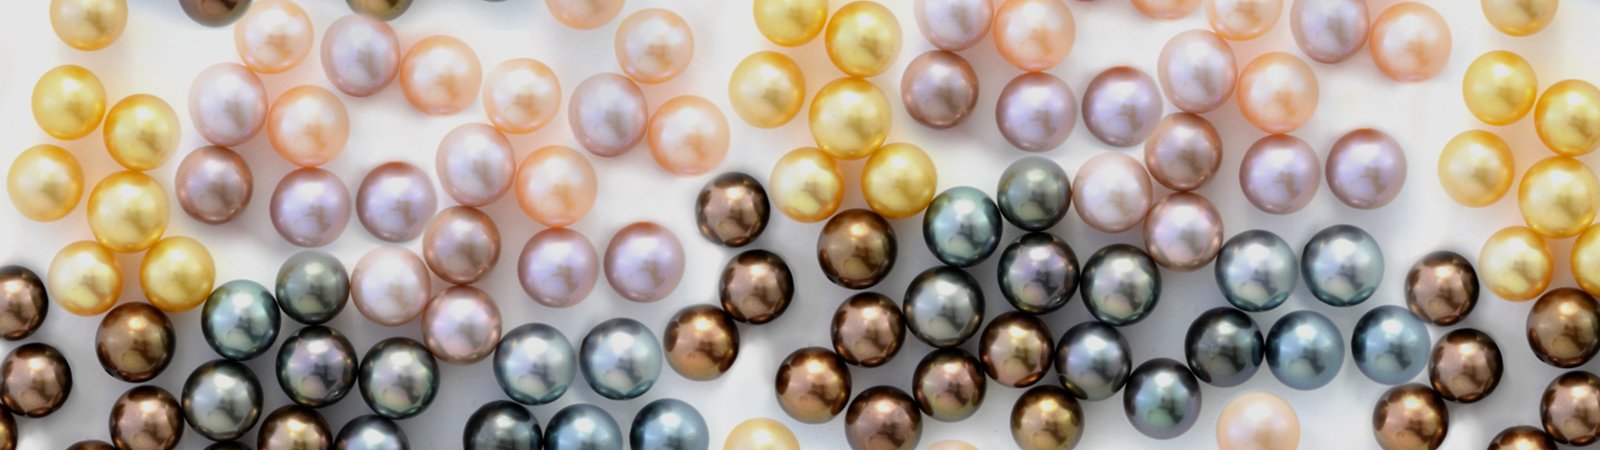 Tahitian Pearls, Chocolate Pearls, and Pearls in Hawaii